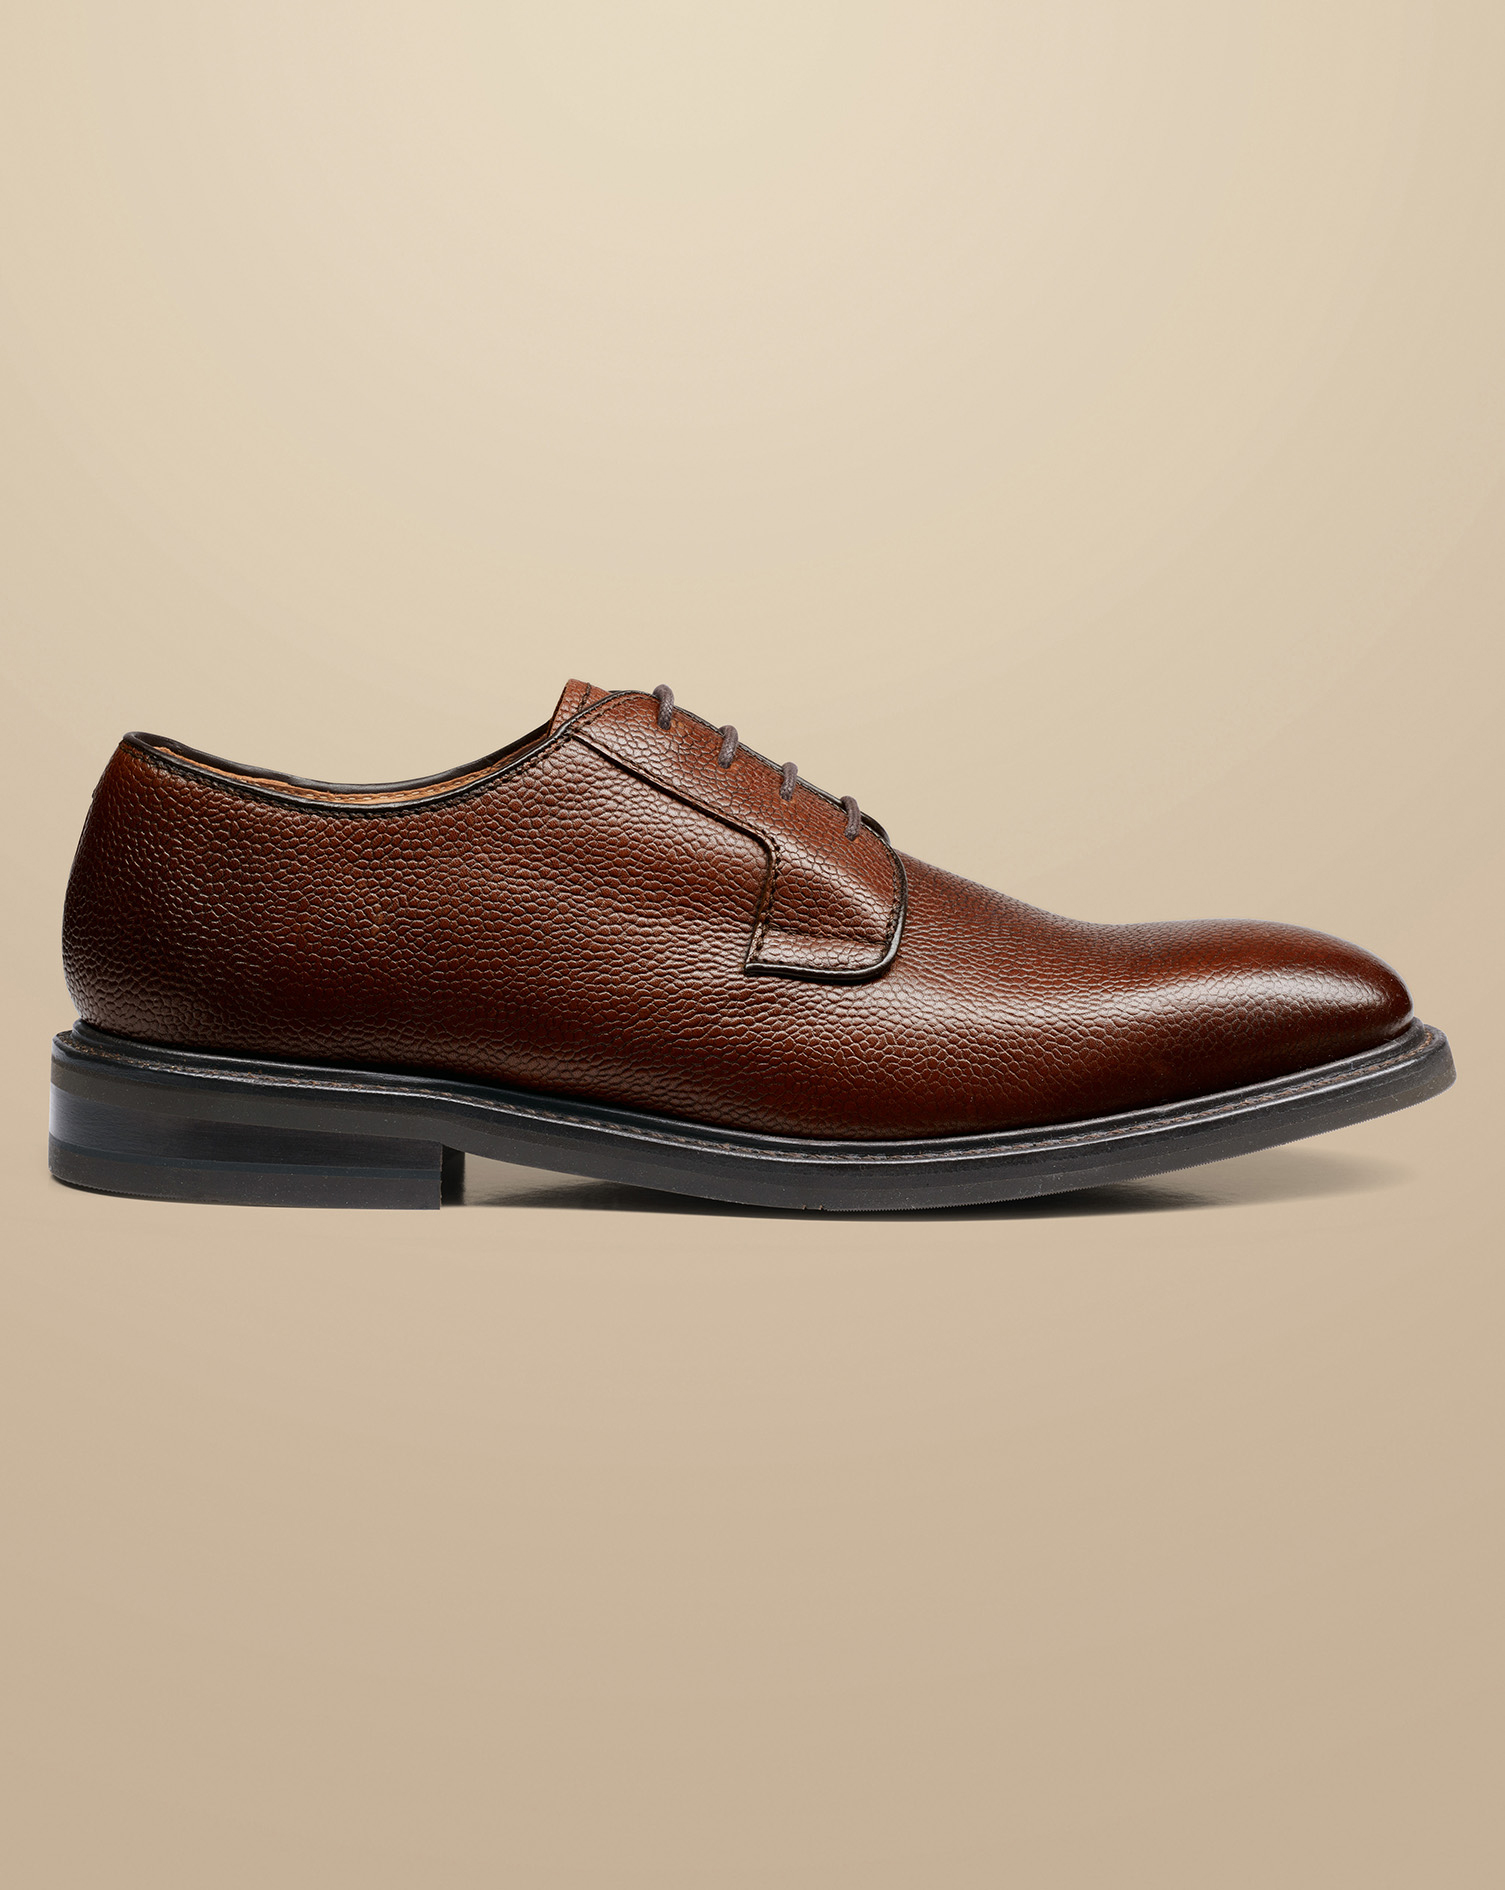 Men's Charles Tyrwhitt Grain Leather Derby Rubber Sole Shoe - Chestnut Brown Size 12
